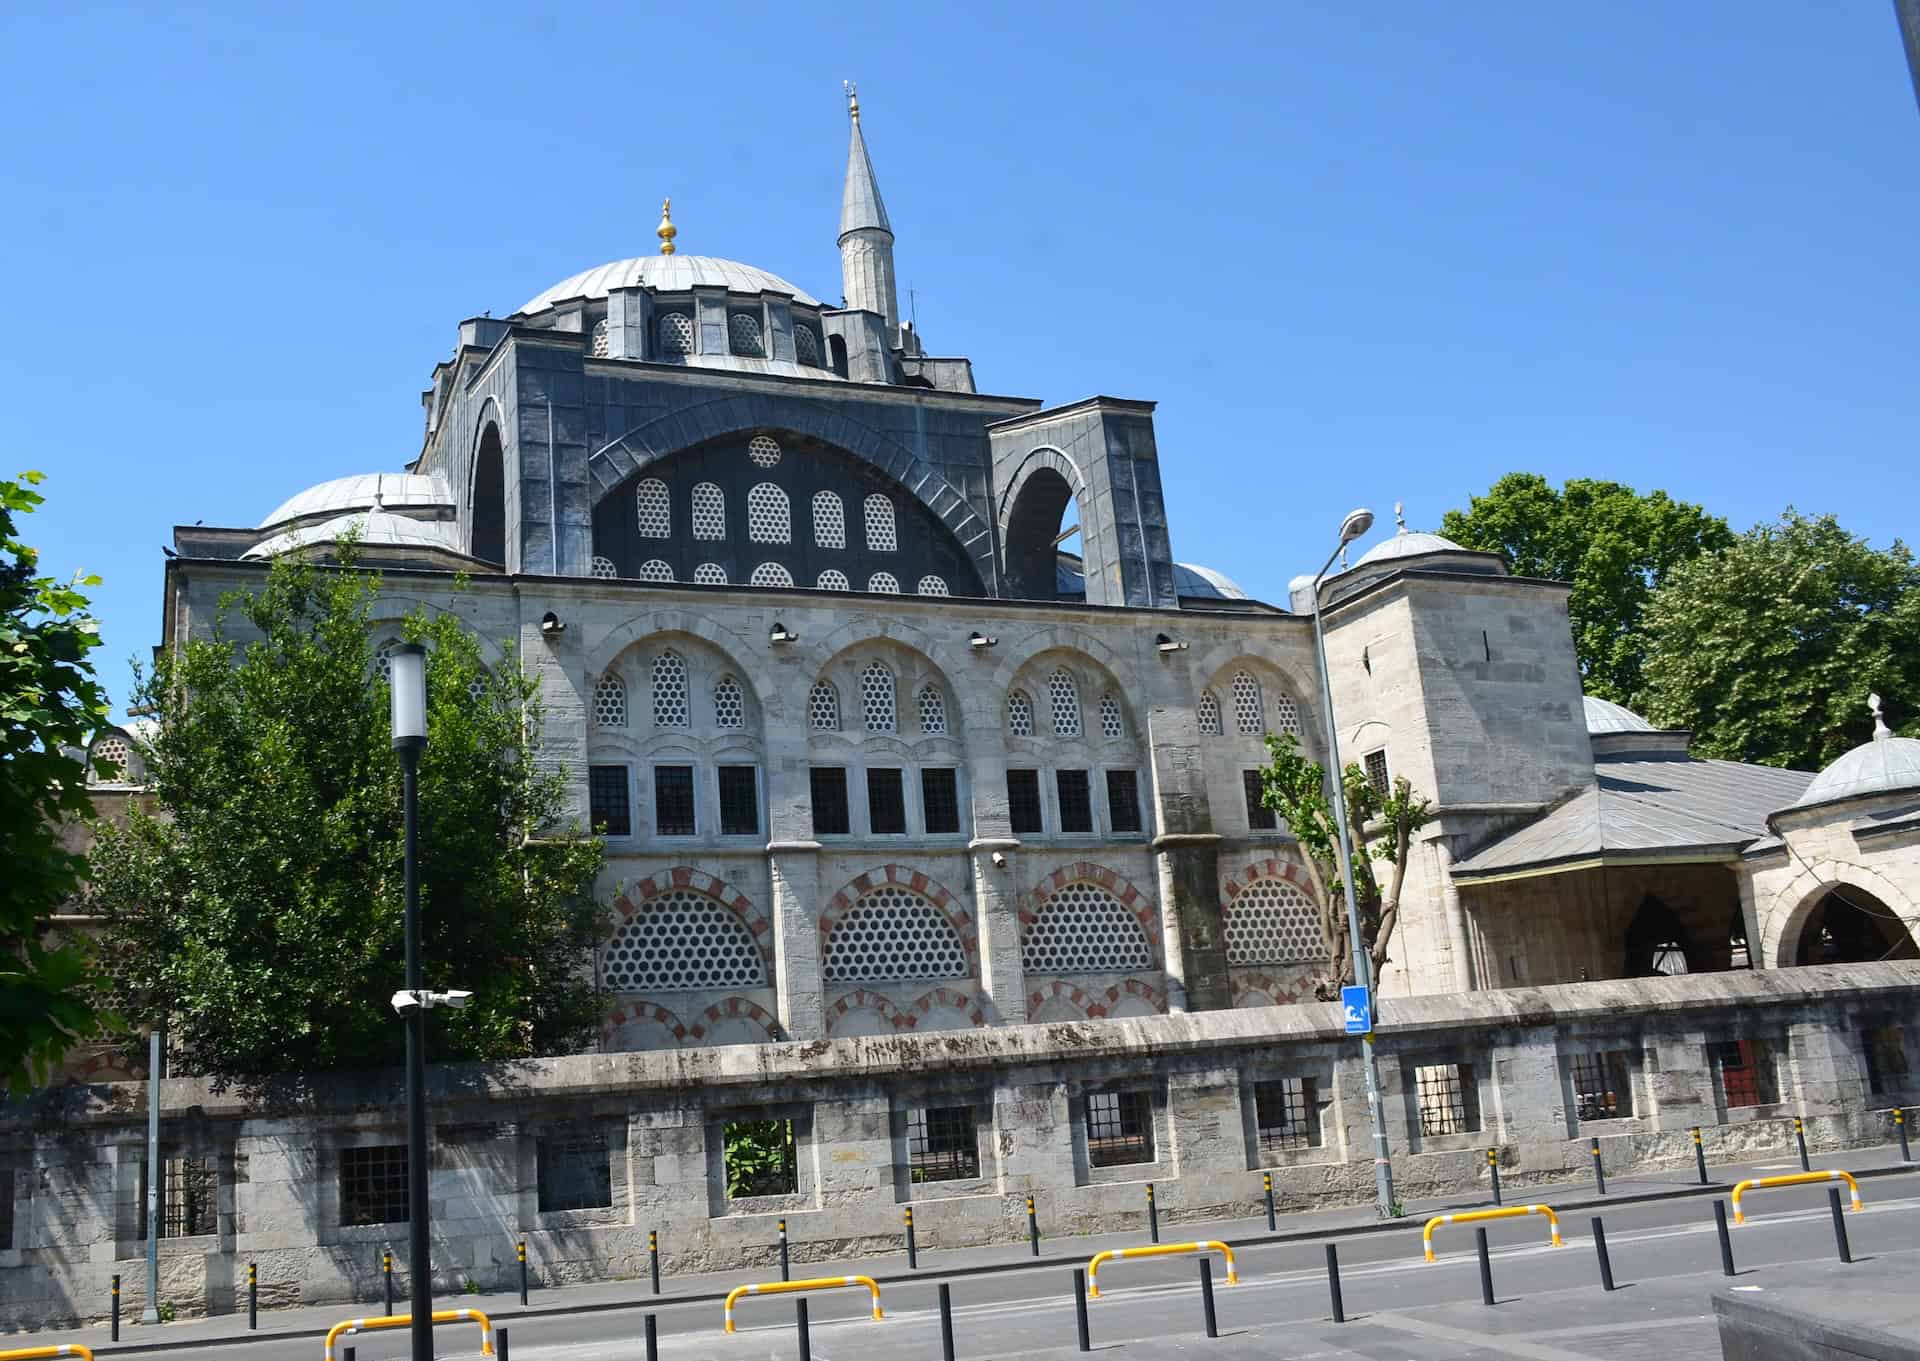 Kılıç Ali Pasha Mosque in Tophane, Istanbul, Turkey